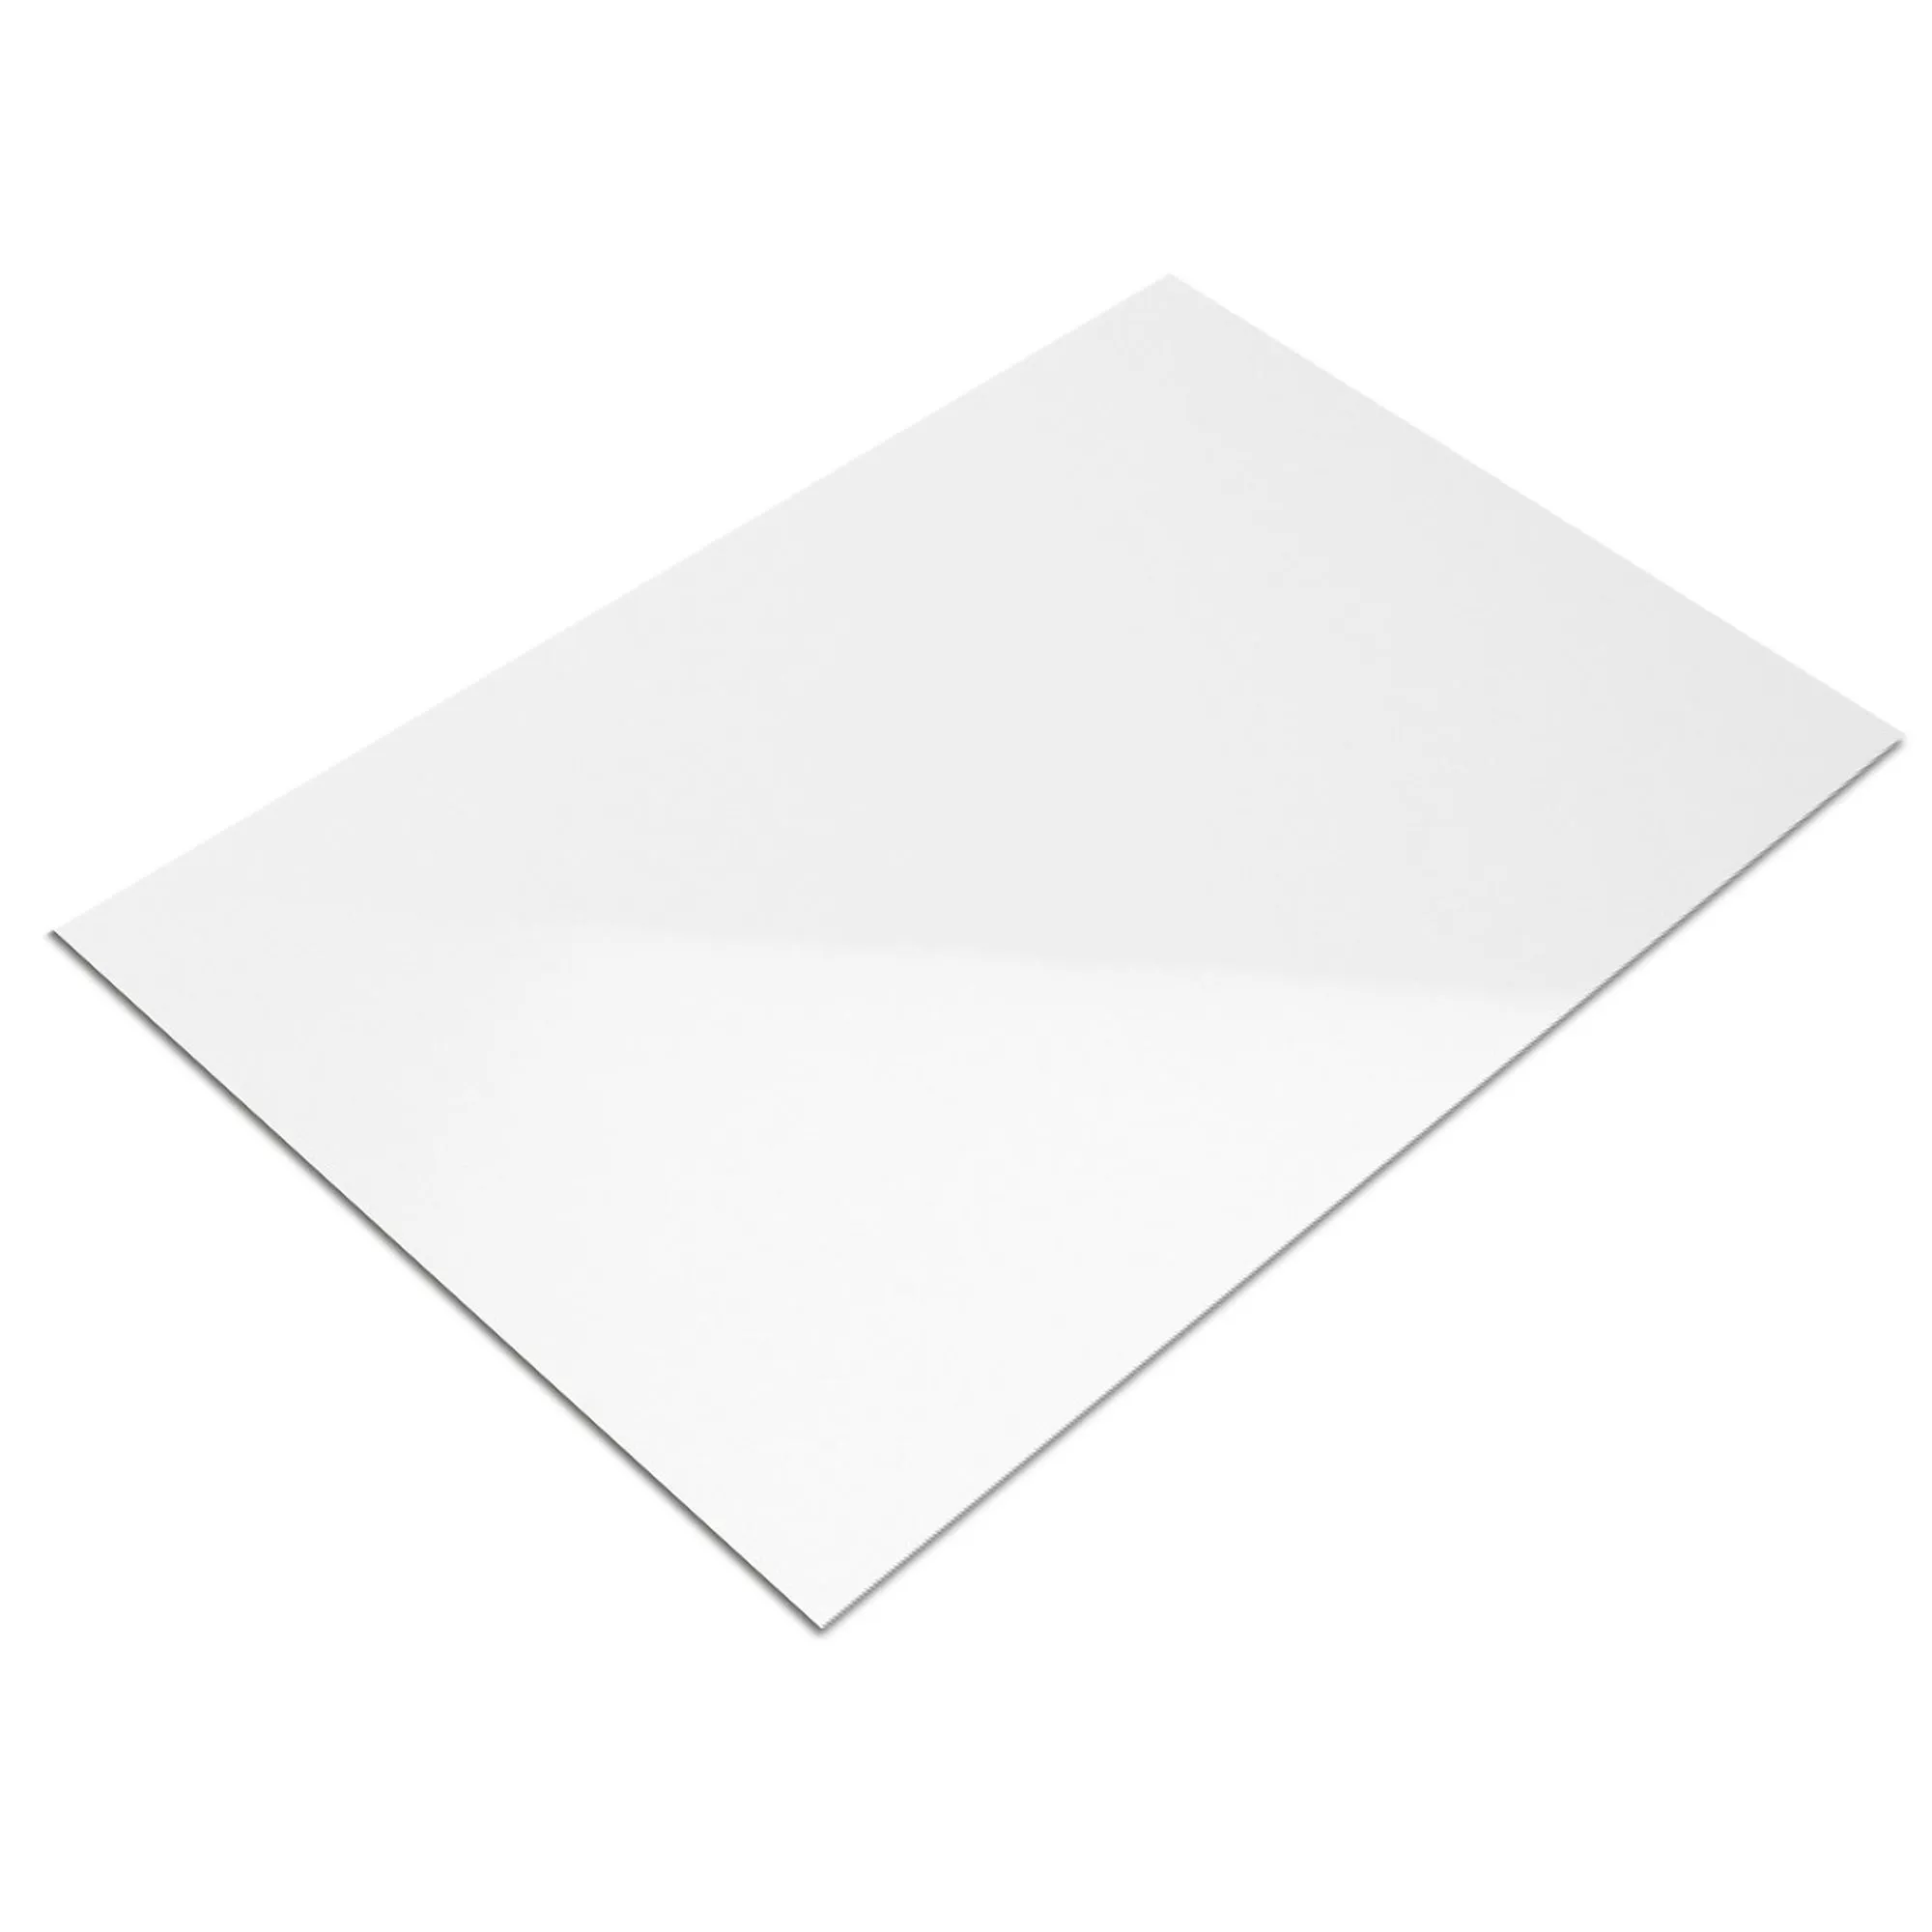 Sample Wall Tiles Fenway White Glossy 20x60cm